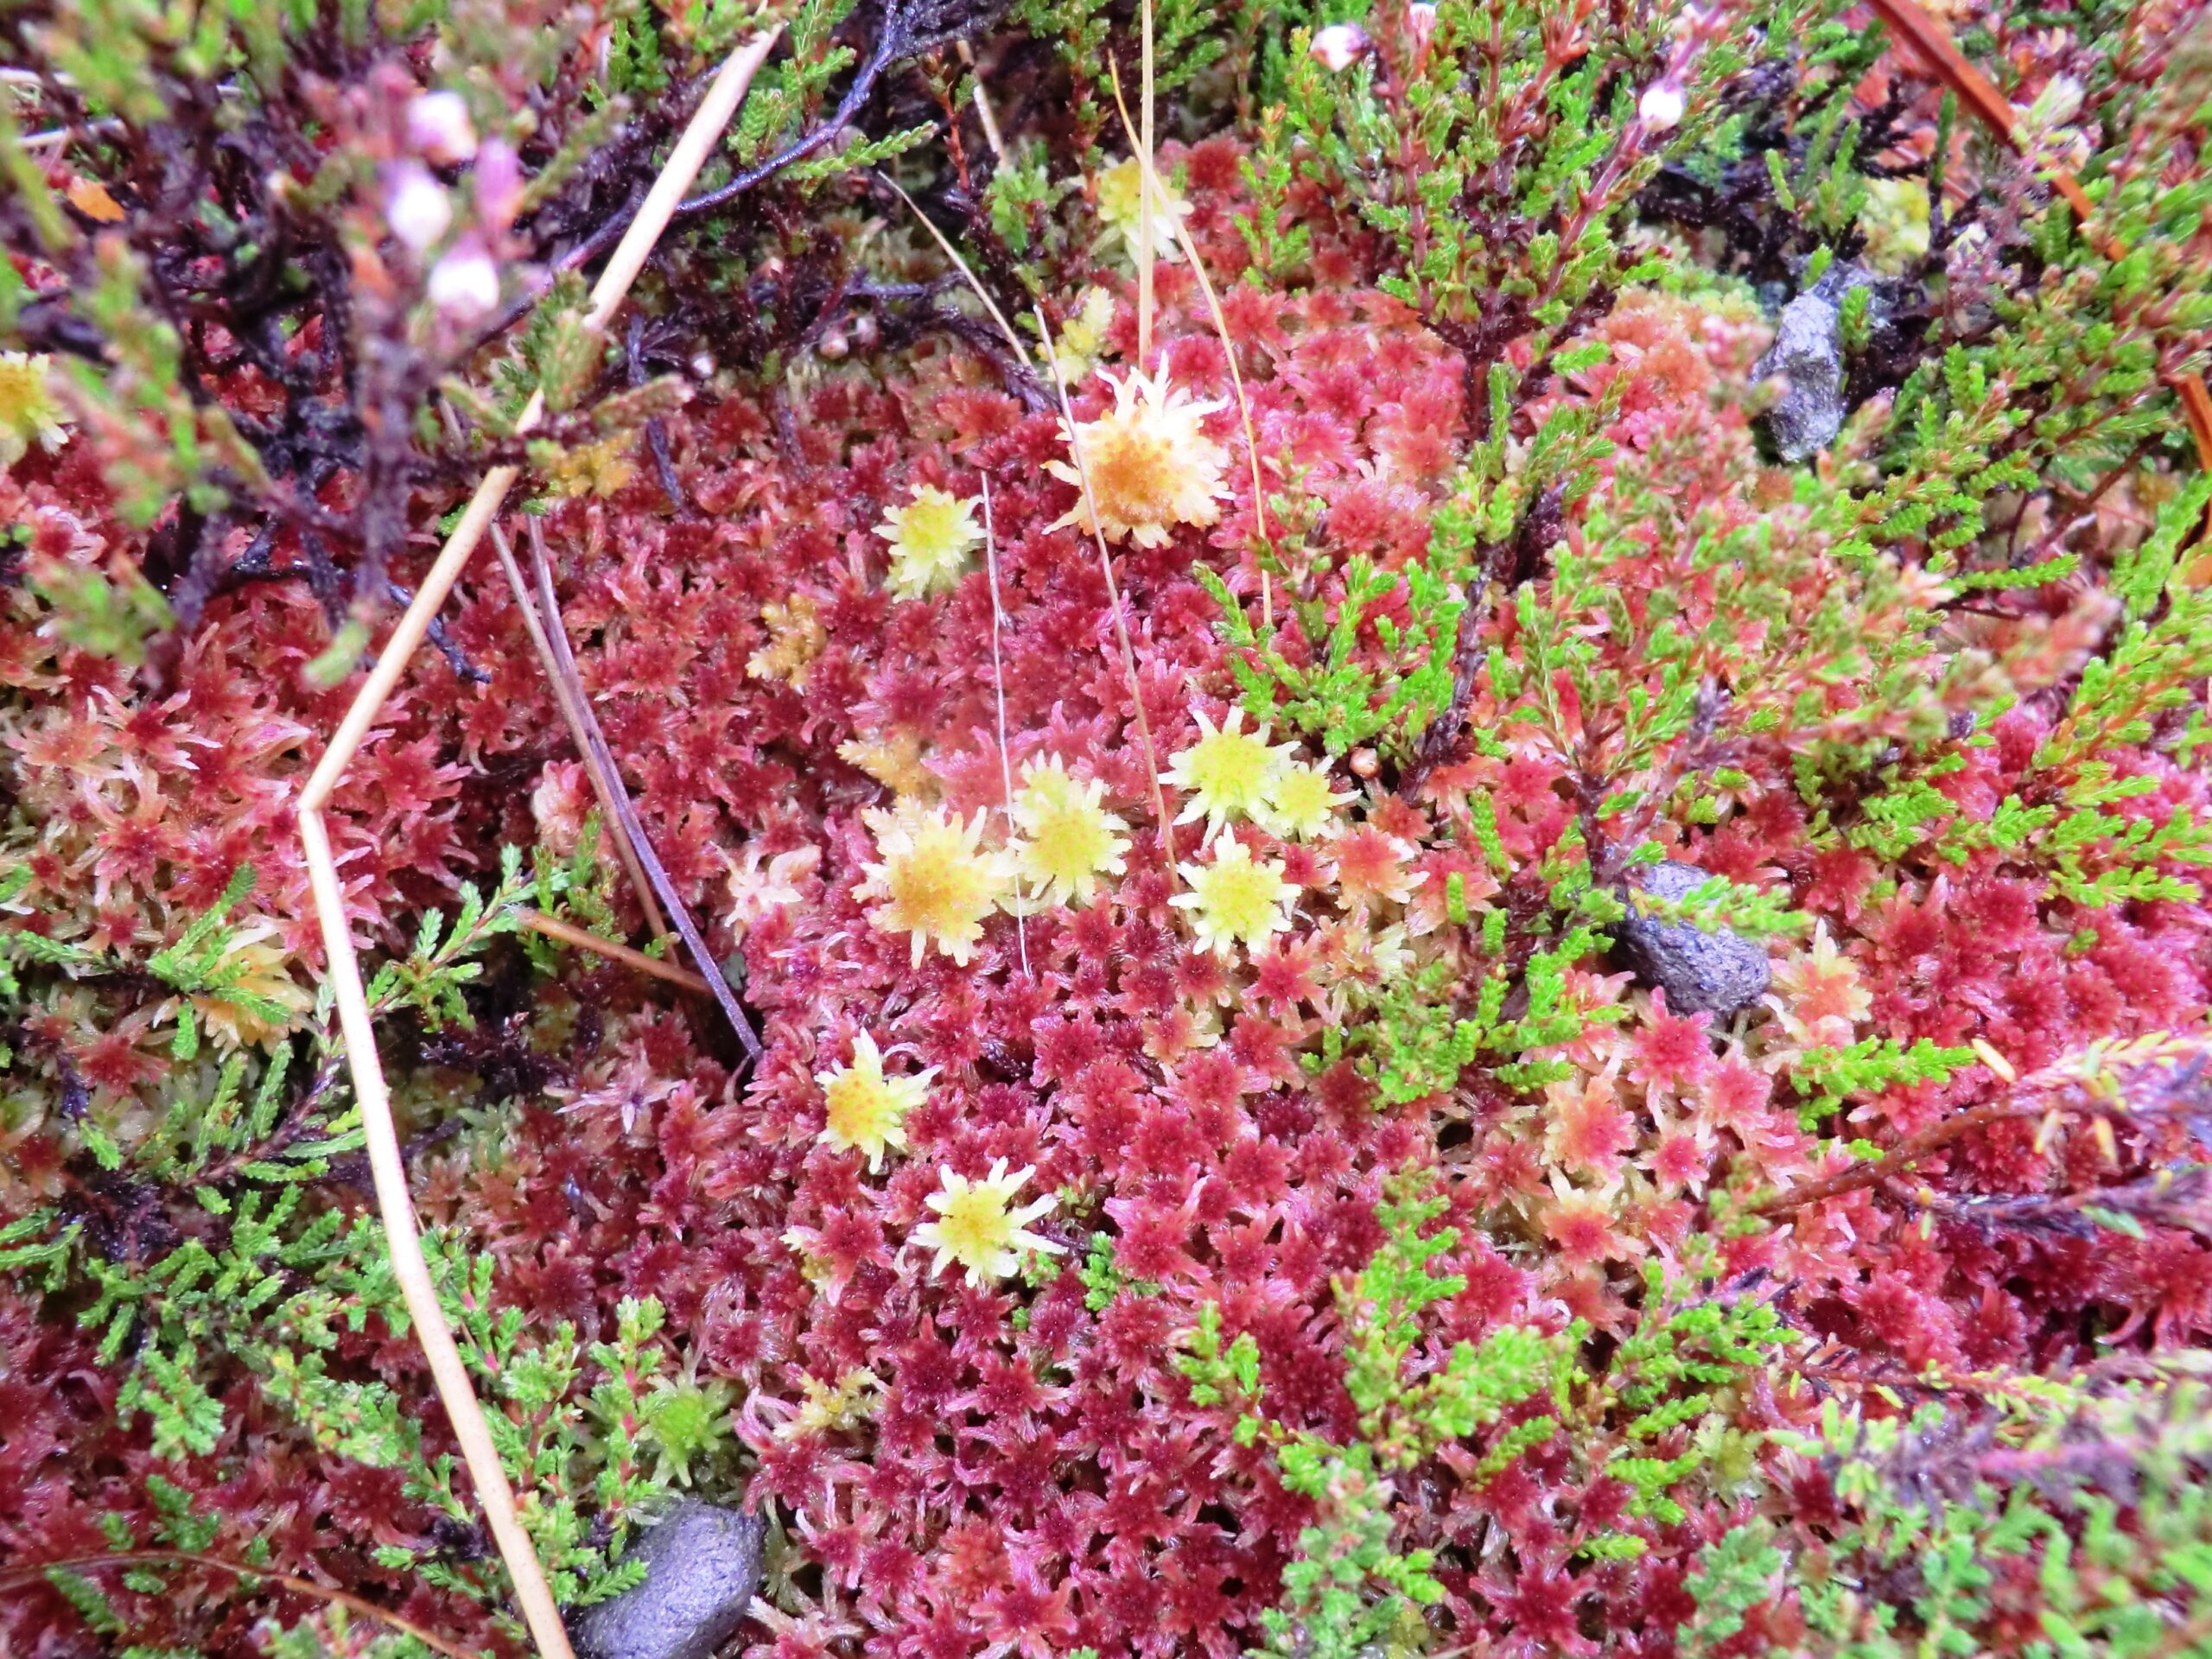 a close-up of sphagnum moss